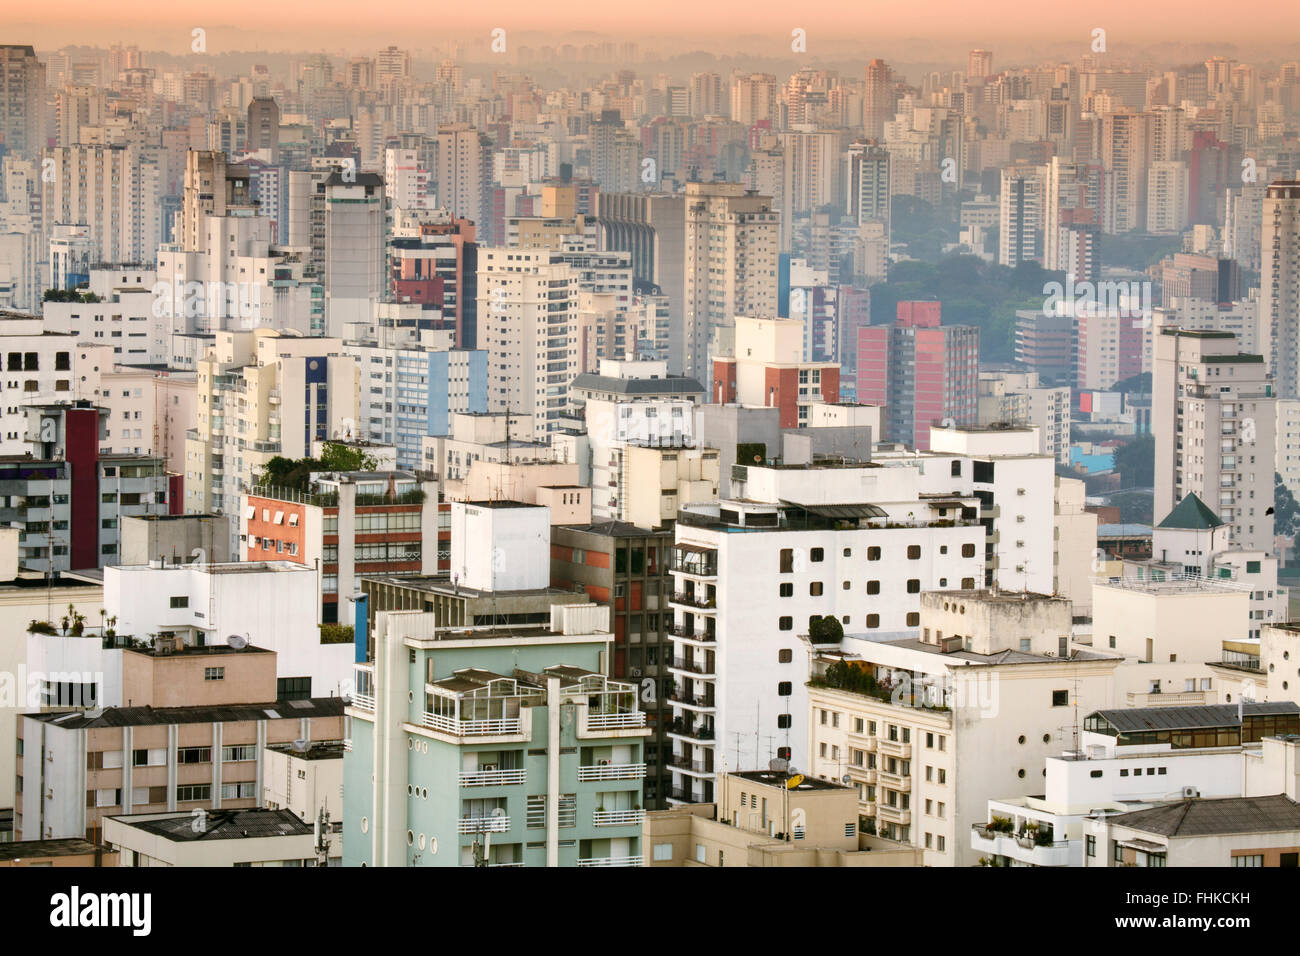 Sao Paulo skyline showing skyscraper apartment blocks and smog Stock Photo